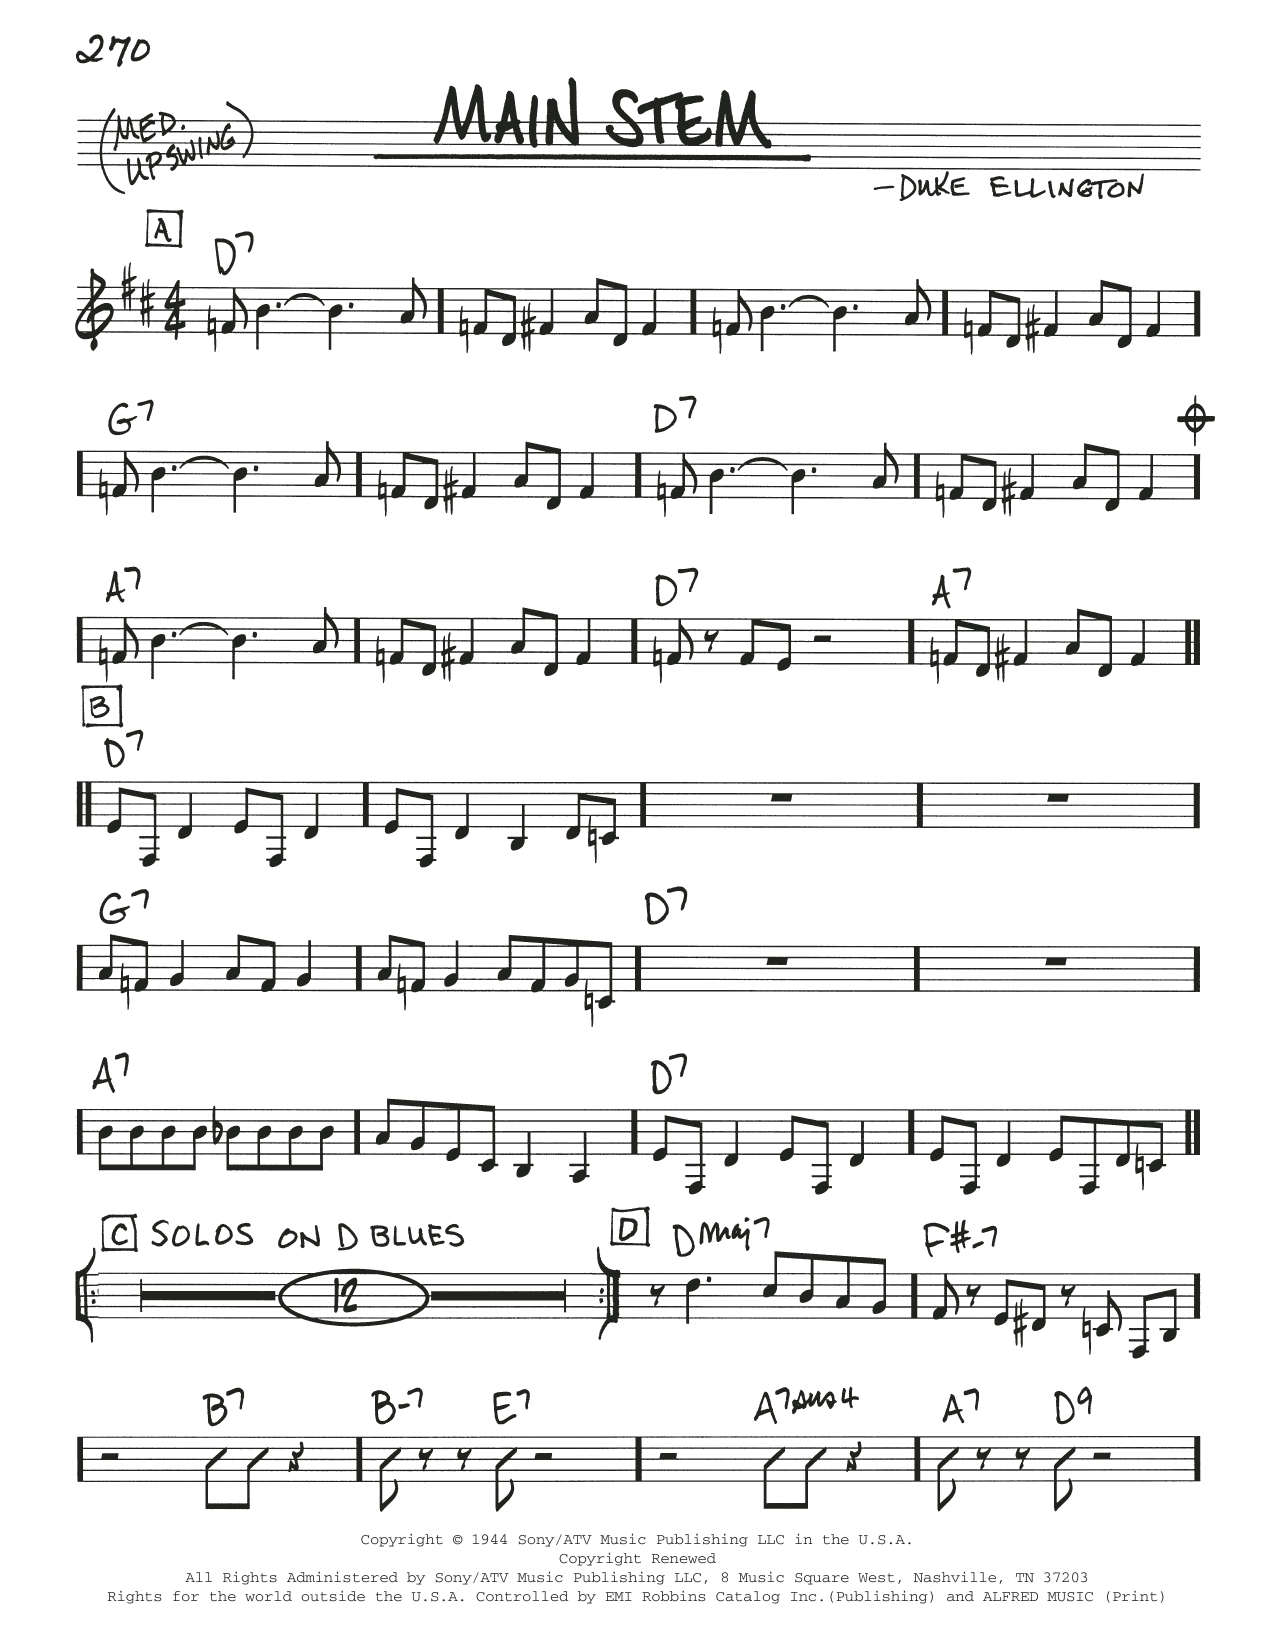 Duke Ellington Main Stem Sheet Music Notes & Chords for Real Book – Melody & Chords - Download or Print PDF